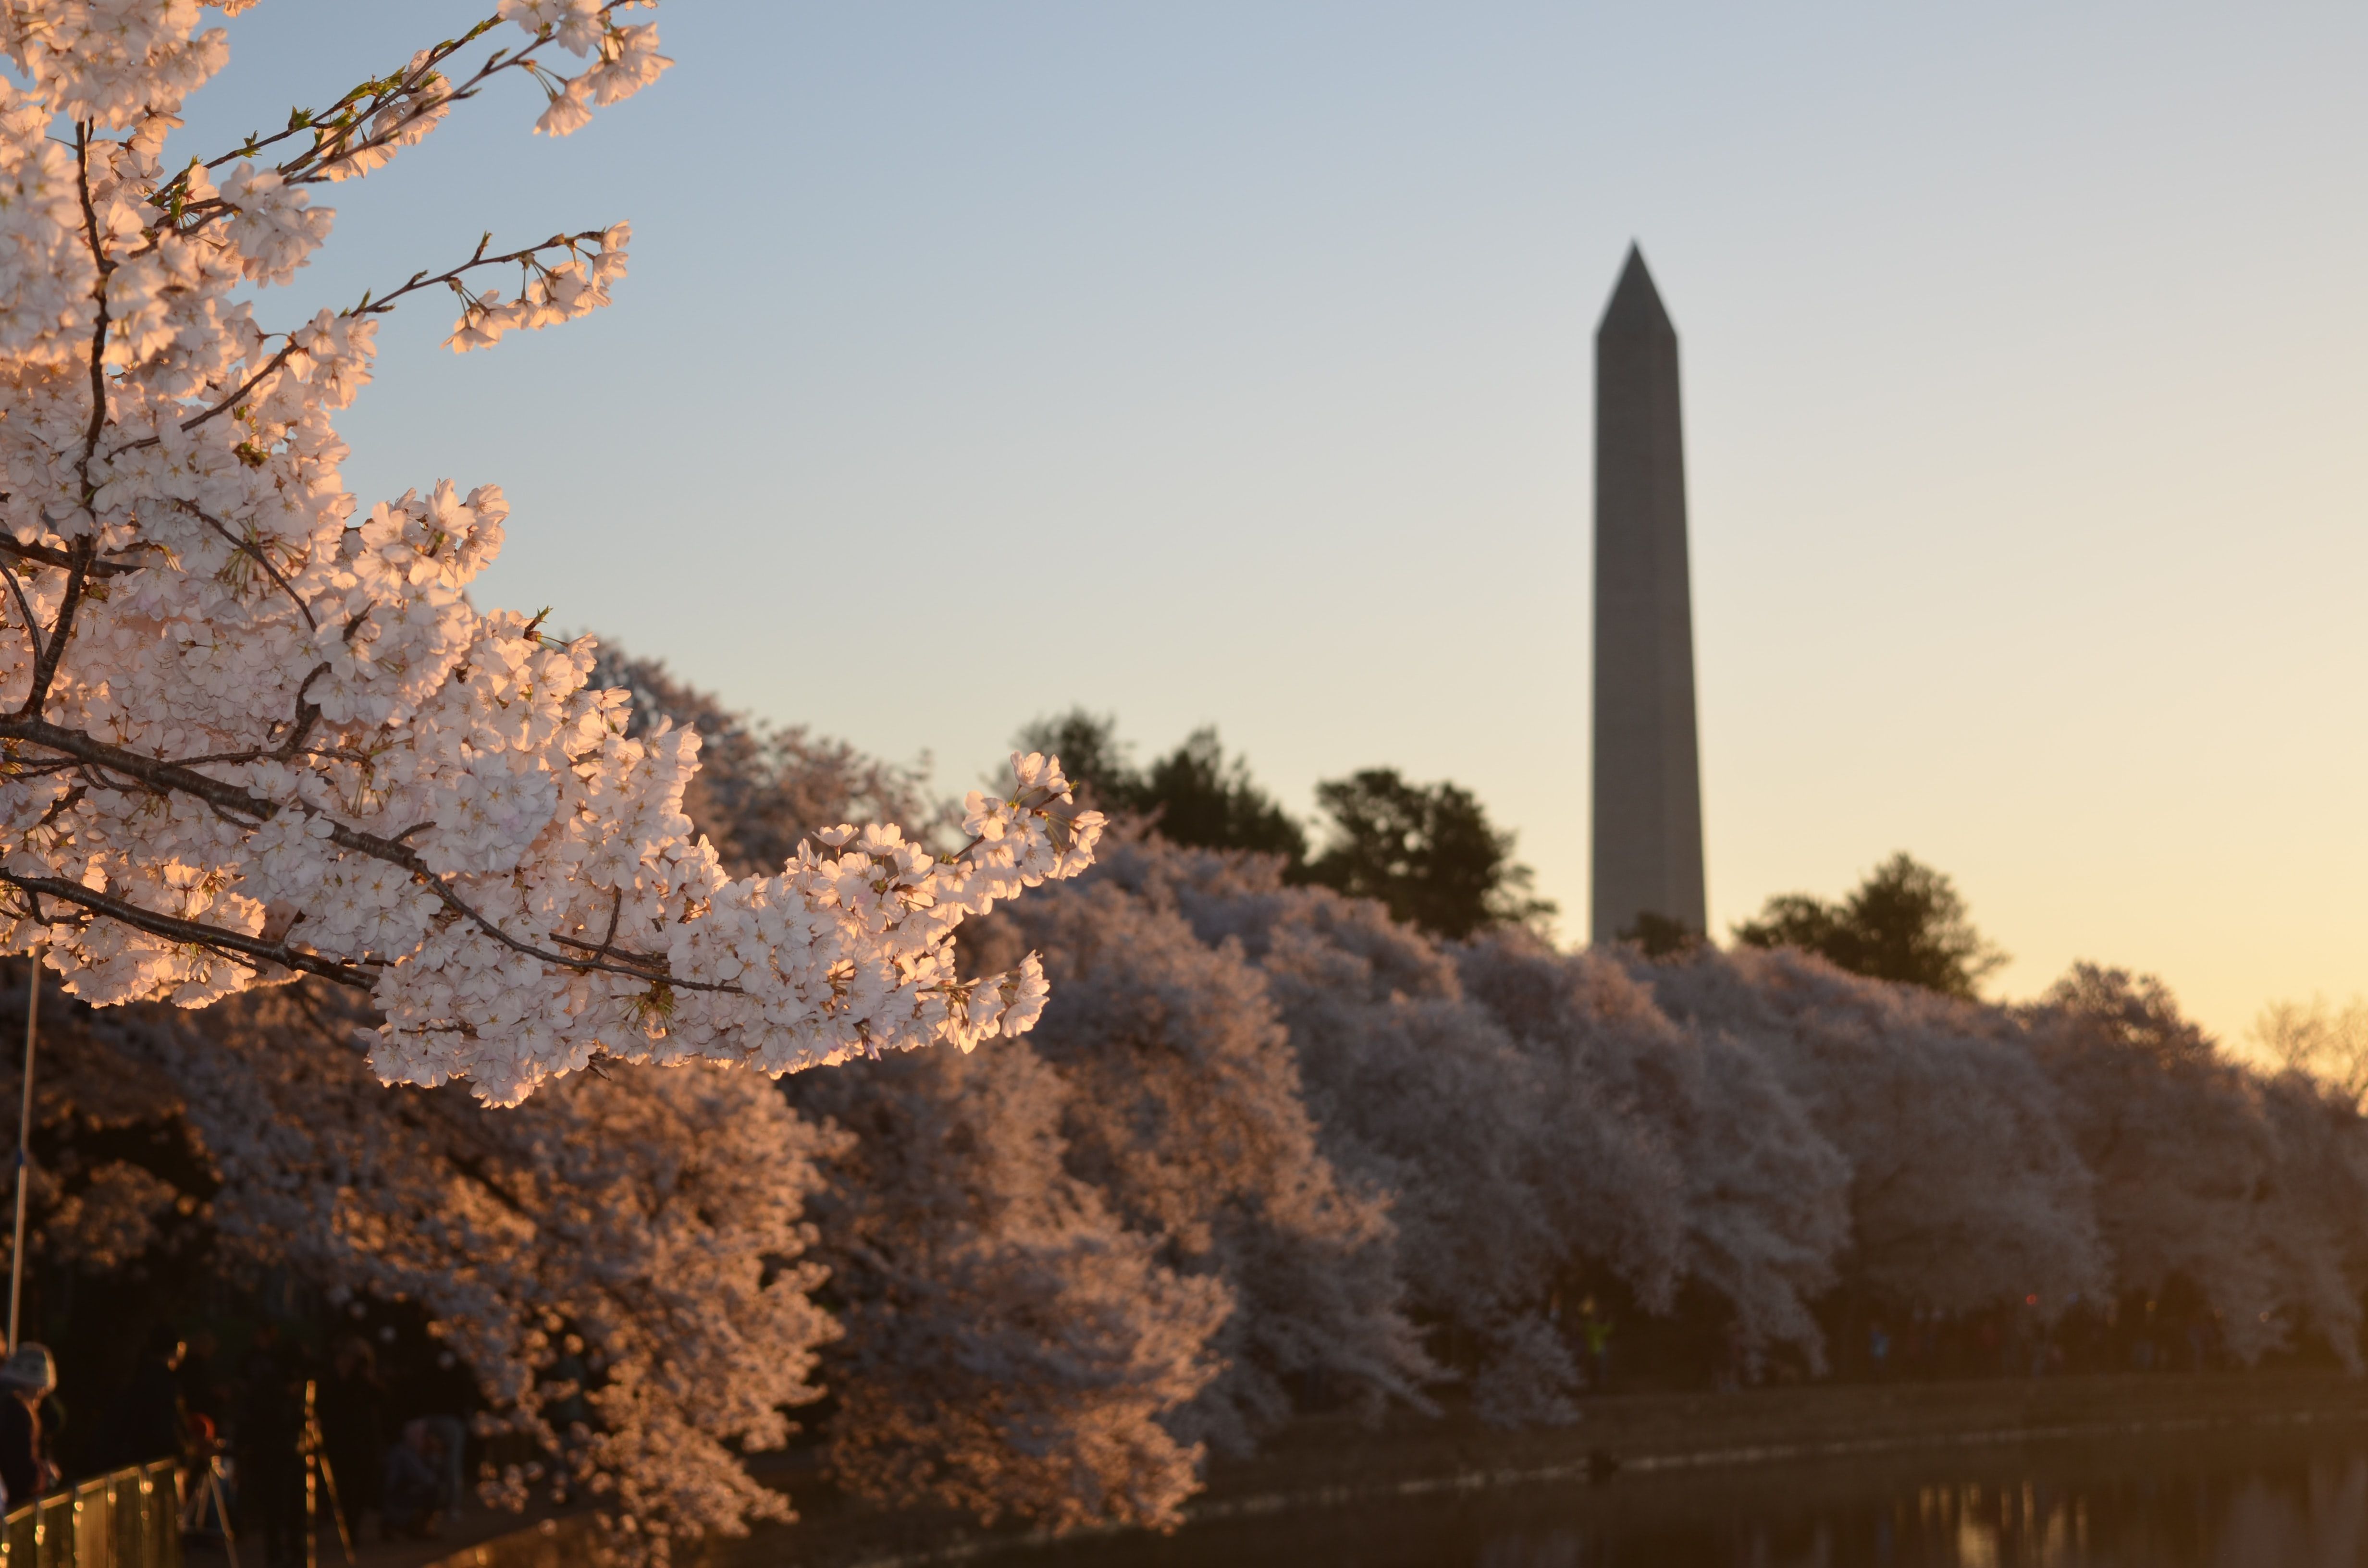 RatePunk National cherry blossom festival in Washington